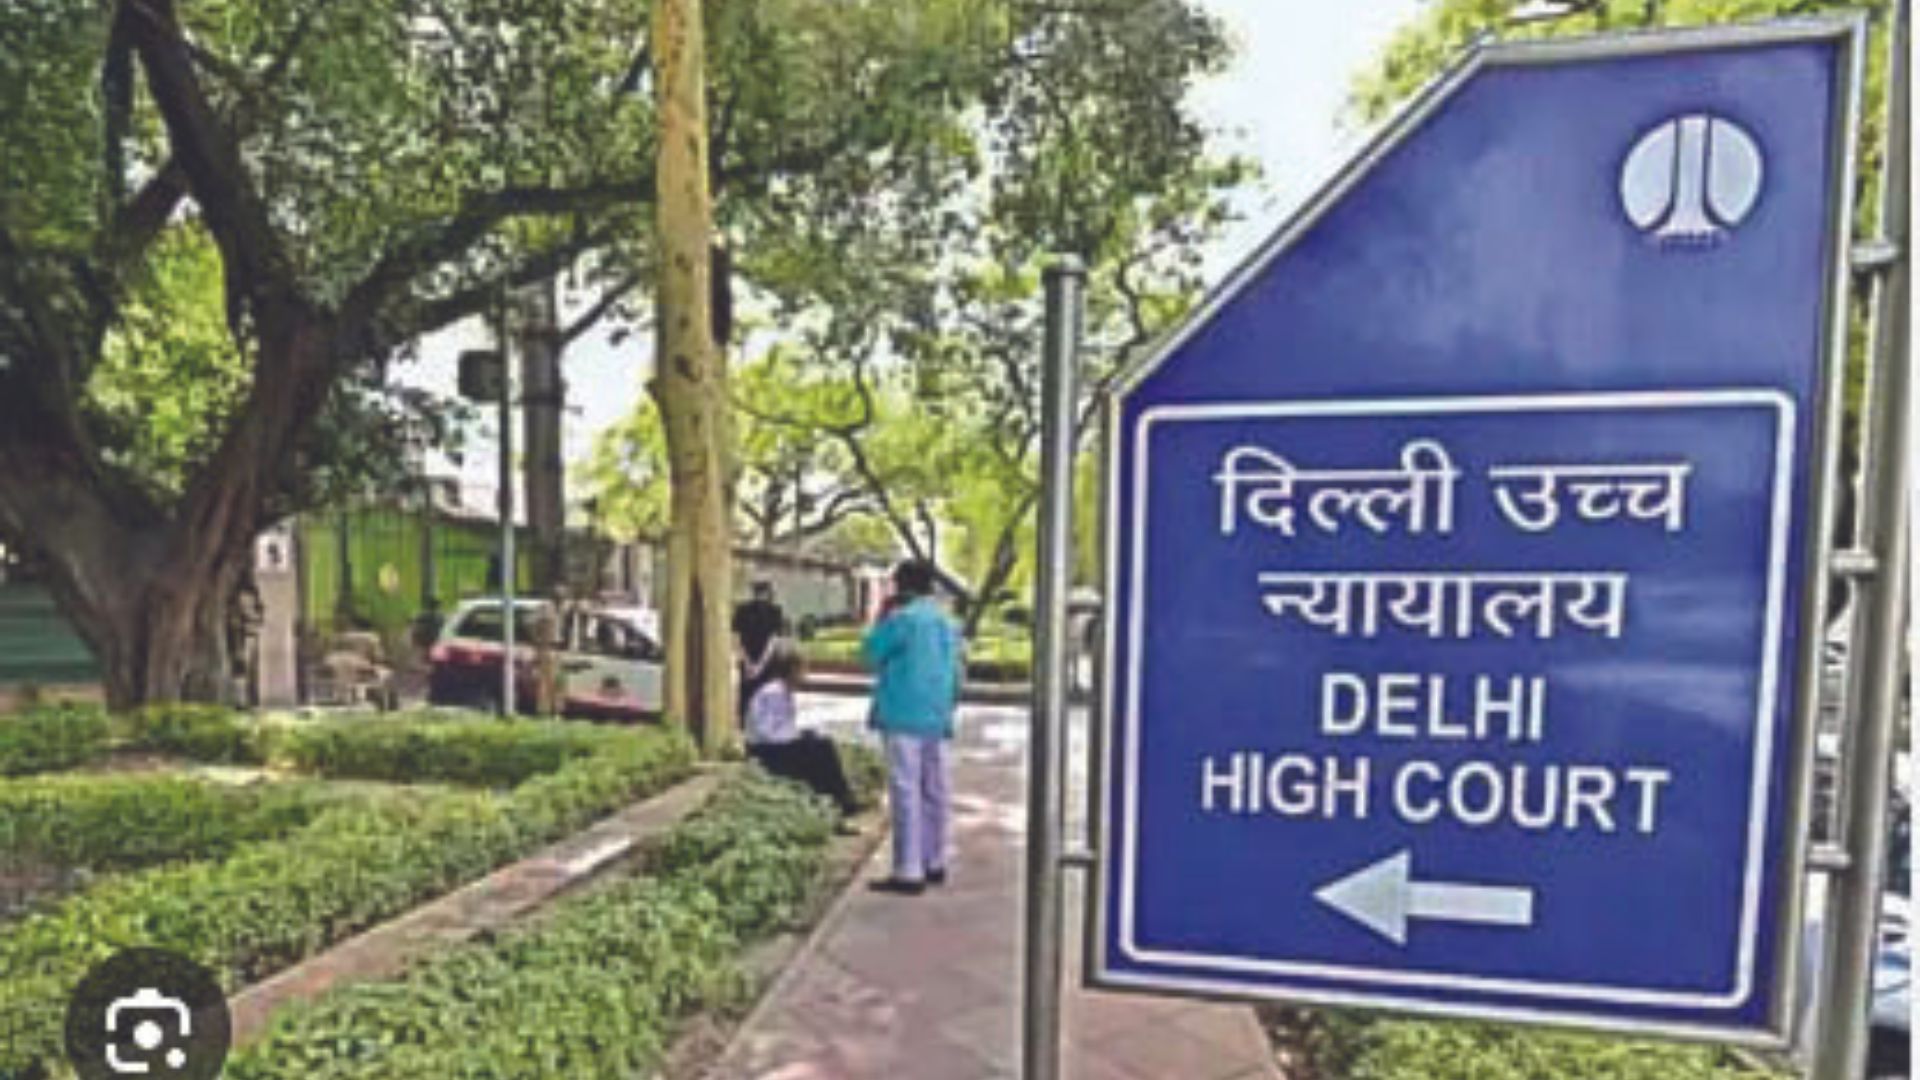 An outer view of Delhi HC